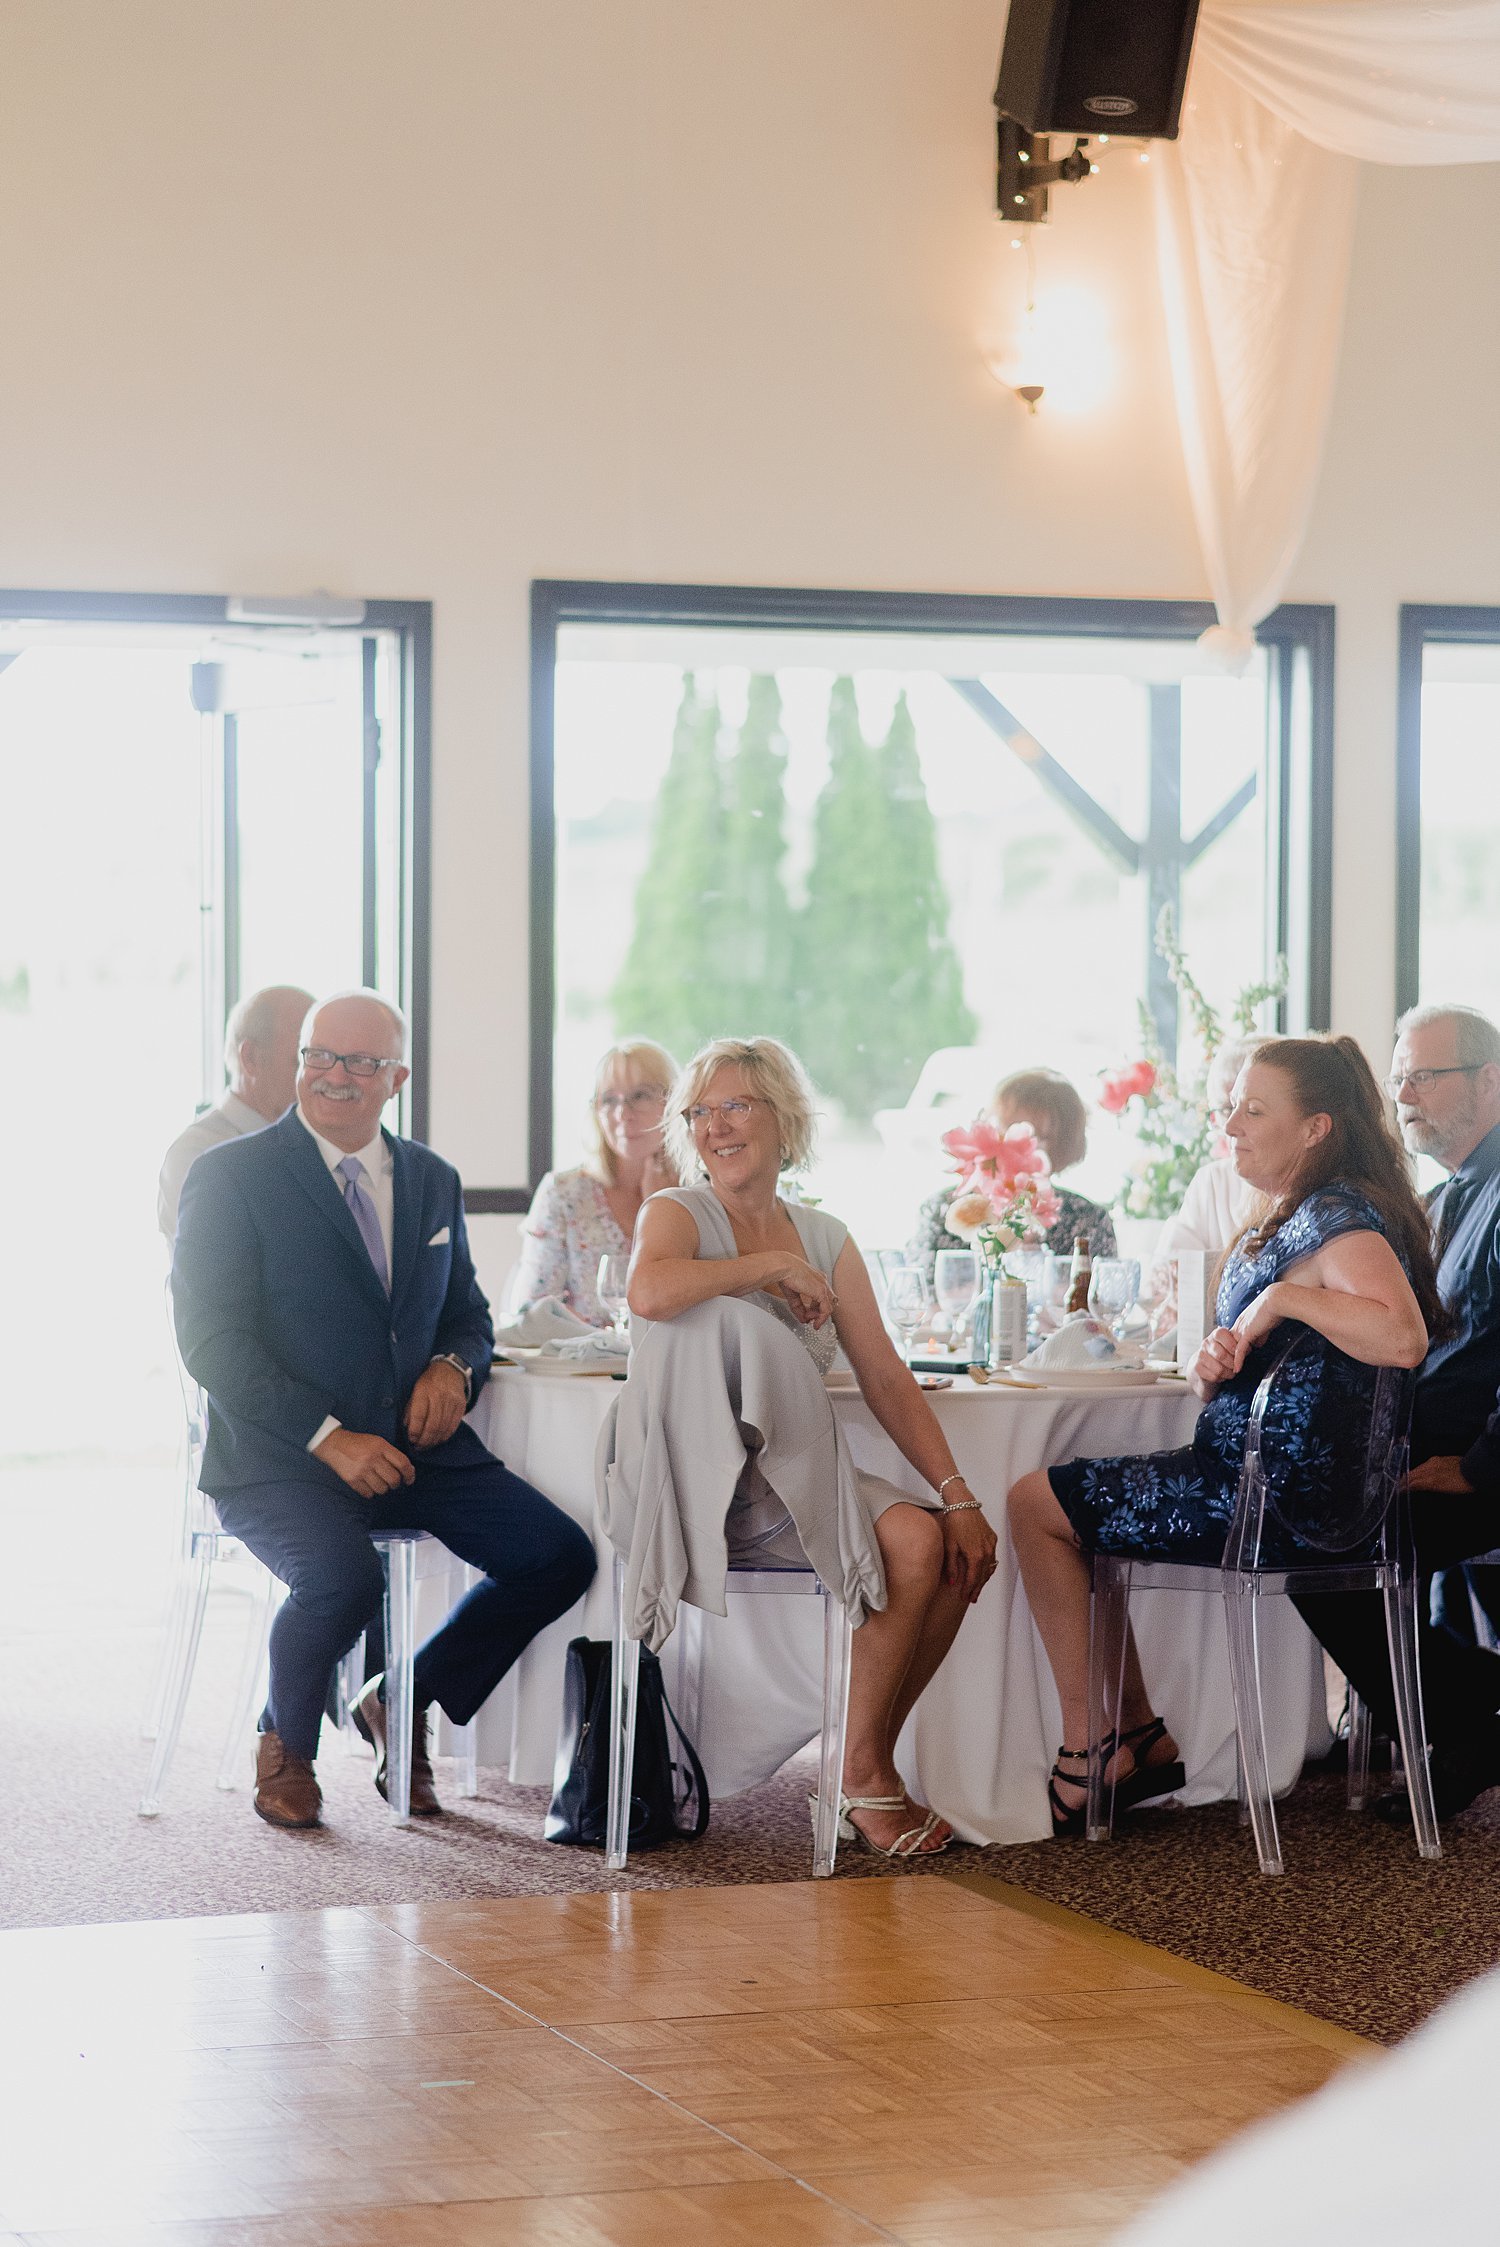 Casa Dea Winery Wedding in Prince Edward County | Prince Edward County Wedding Photographer | Holly McMurter Photographs_0151.jpg